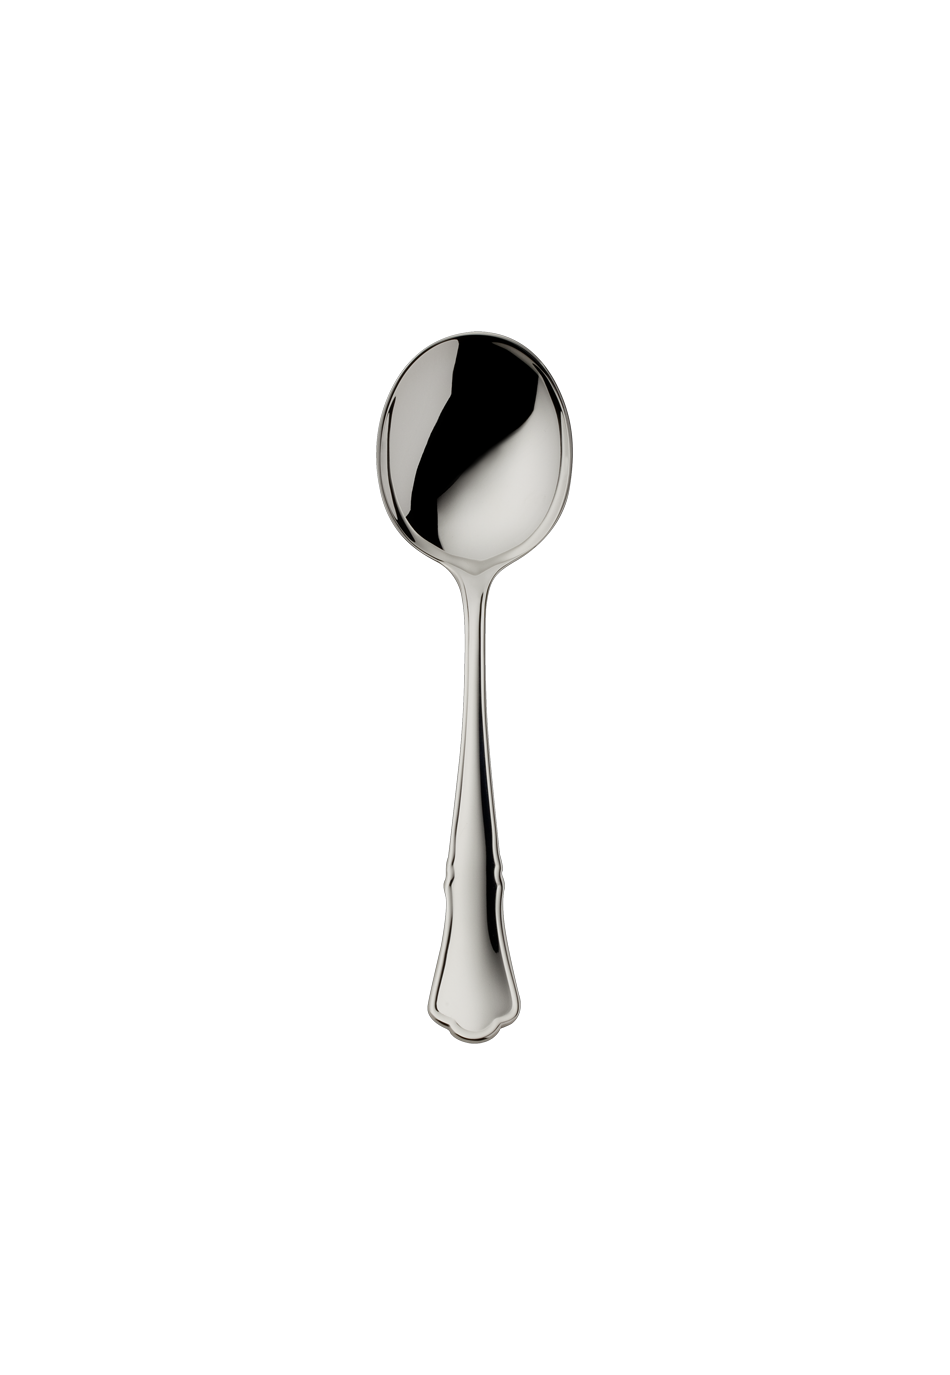 Alt-Chippendale Cream Spoon (Broth Spoon) (150g massive silverplated)